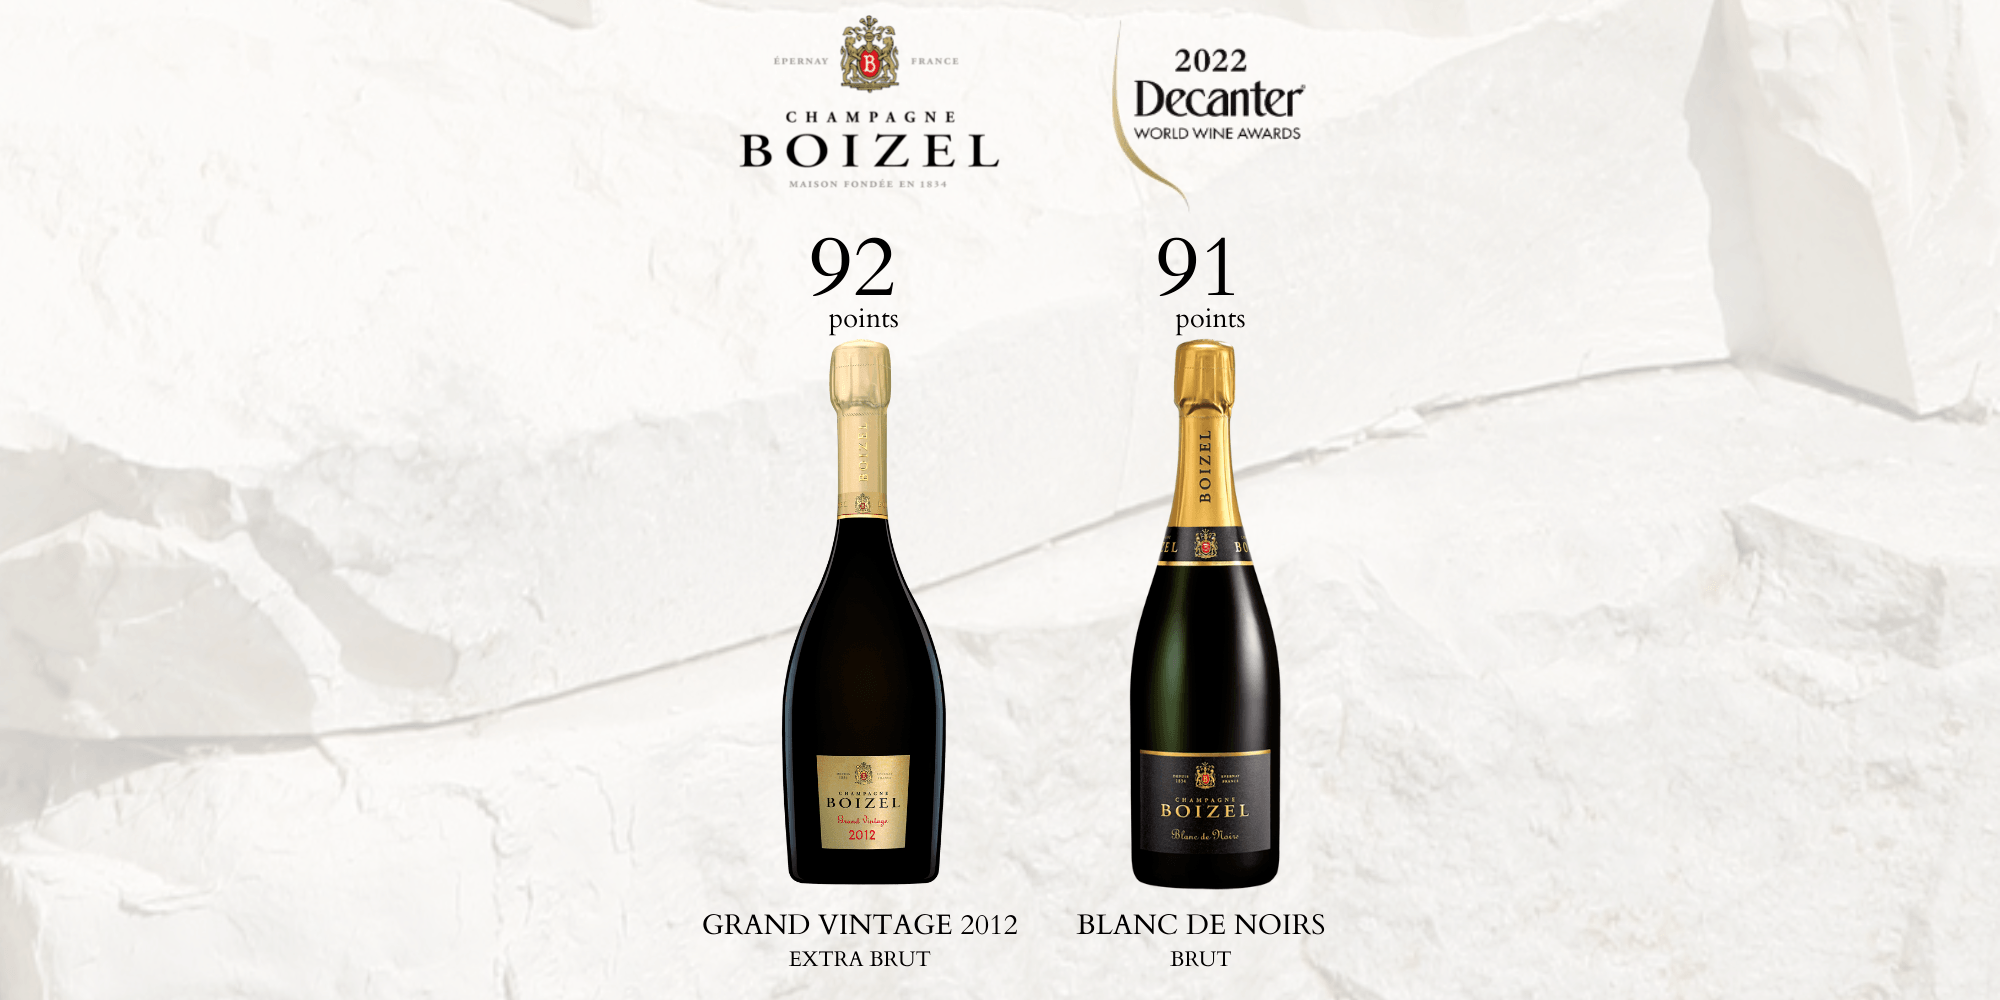 Decanter World Wine Awards 2022 - Champagne Boizel - Epernay France